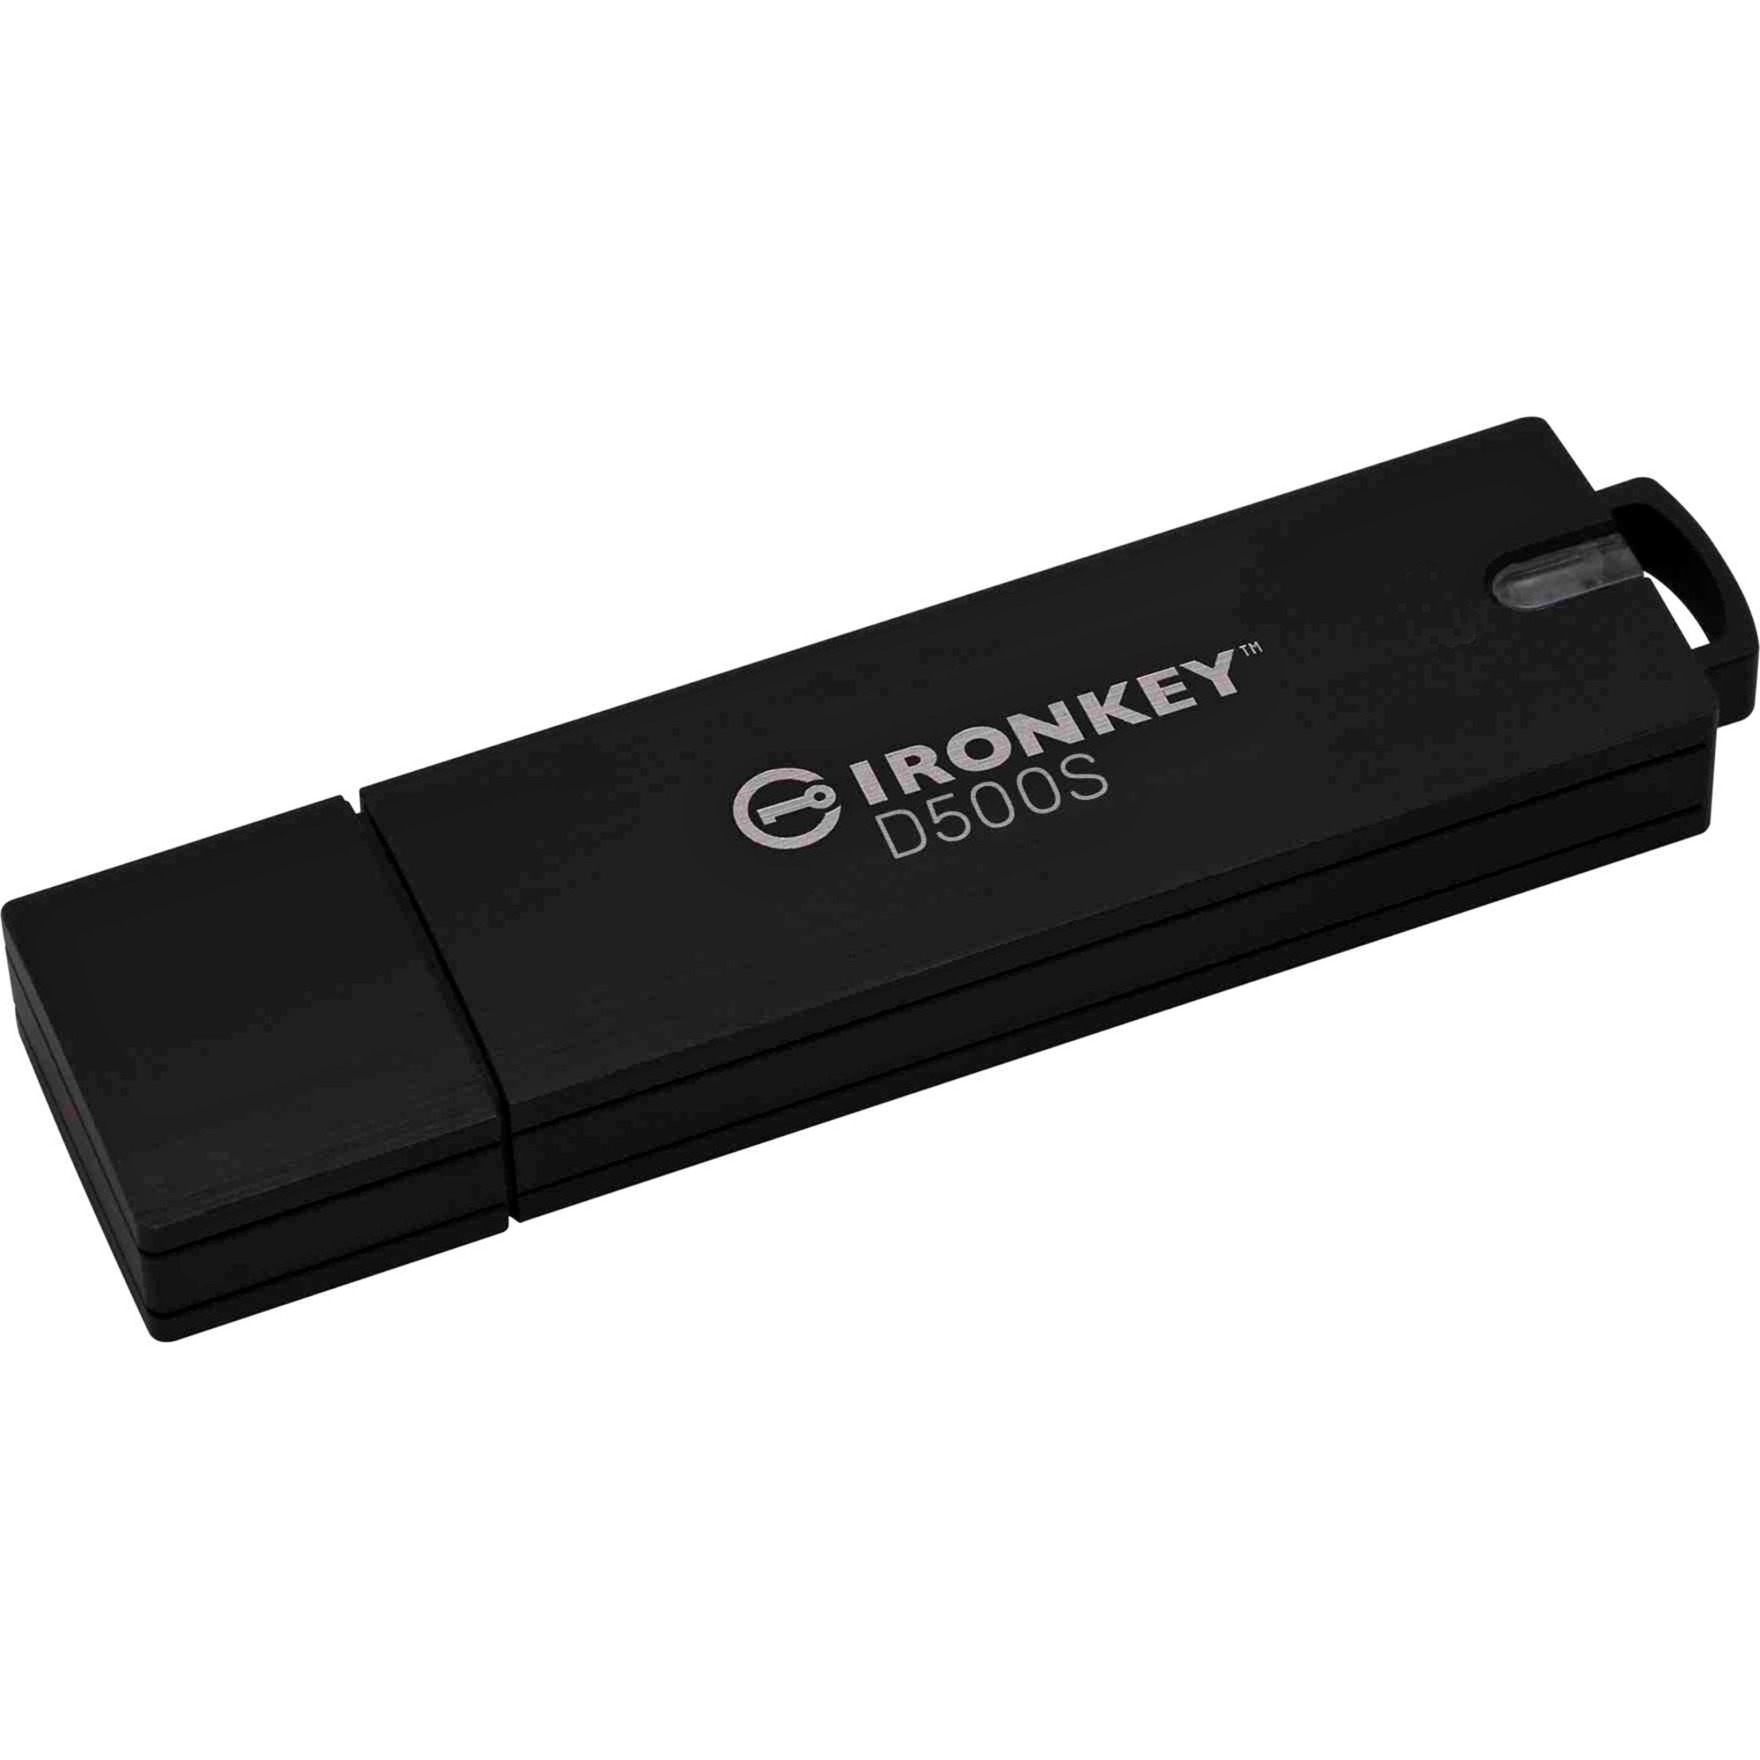 IronKey D500S 128 GB, USB-Stick von Kingston